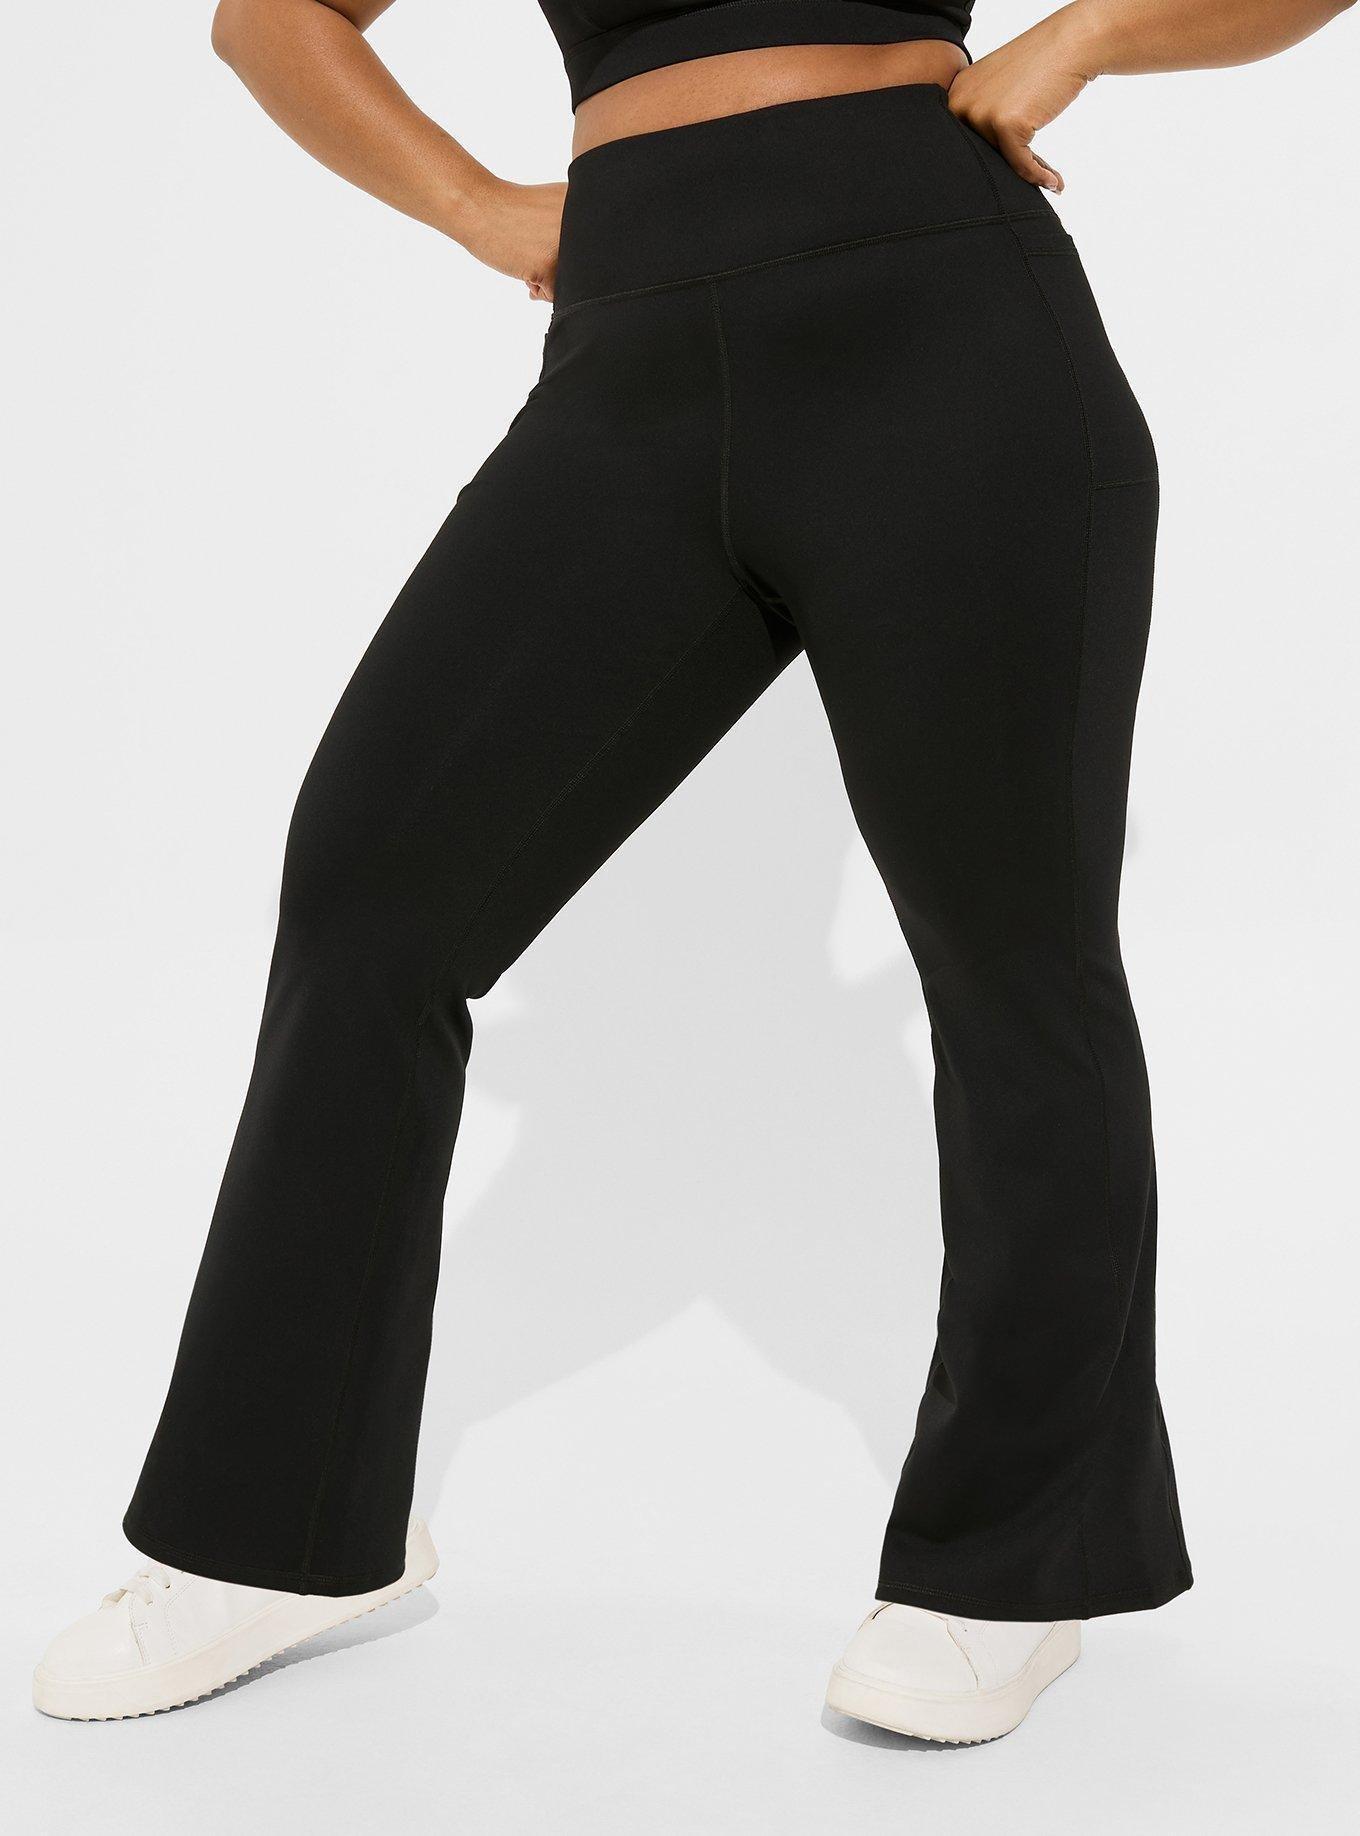 Ultra-Stretch Ponte Bootcut Pant - 30 inseam  Bootcut pants, Squat proof  leggings, Bootcut